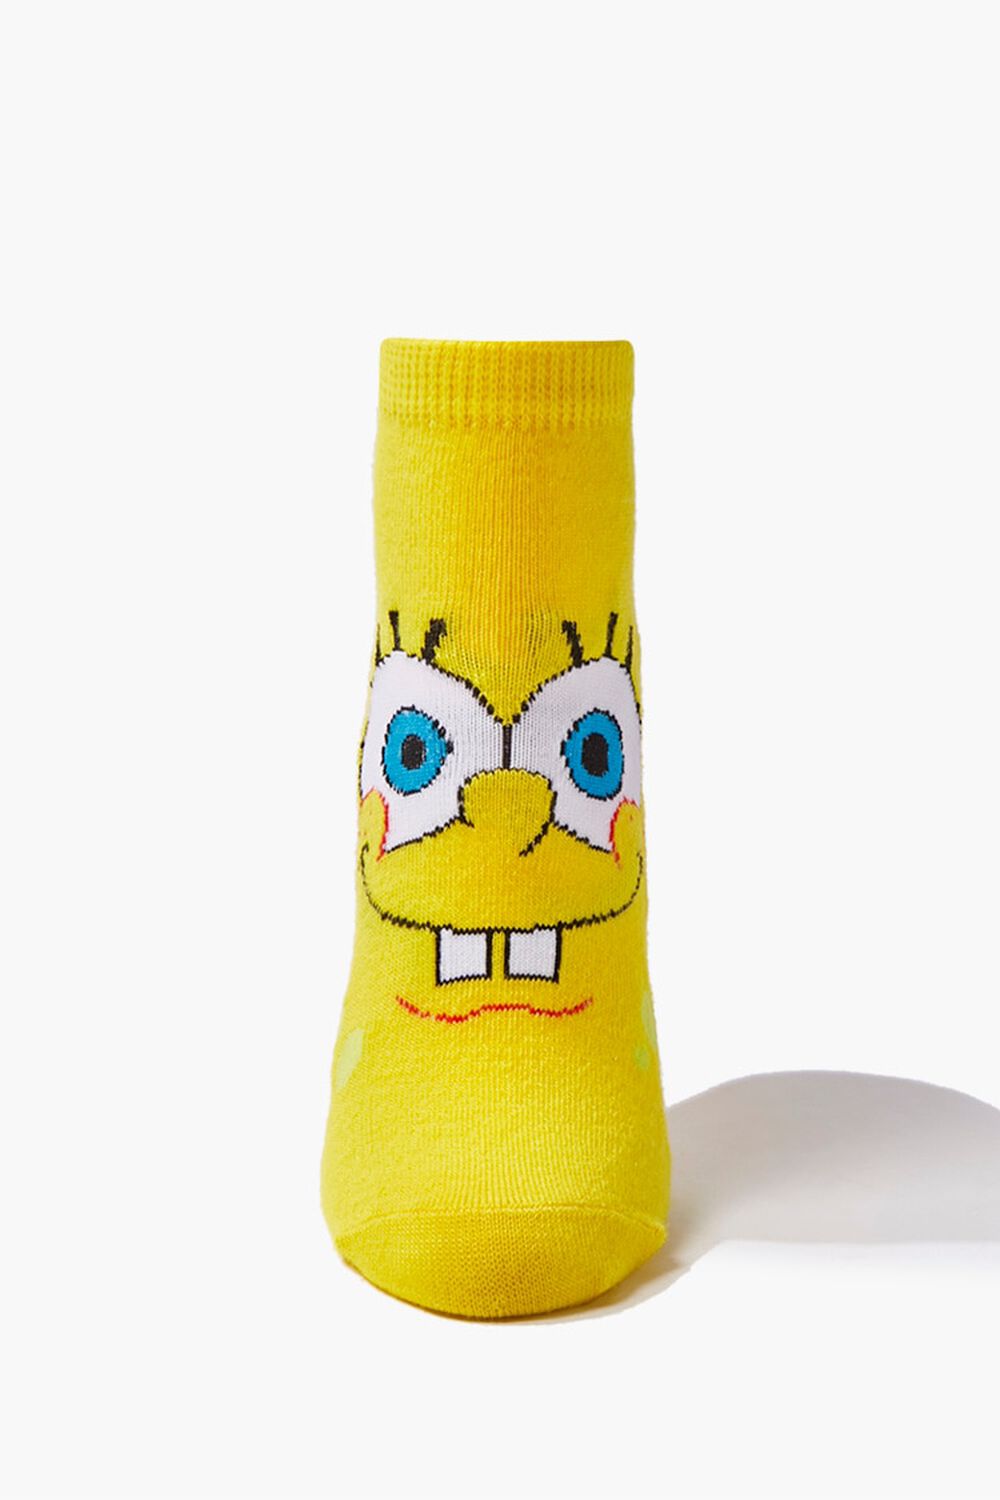 SpongeBob SquarePants Ankle Socks